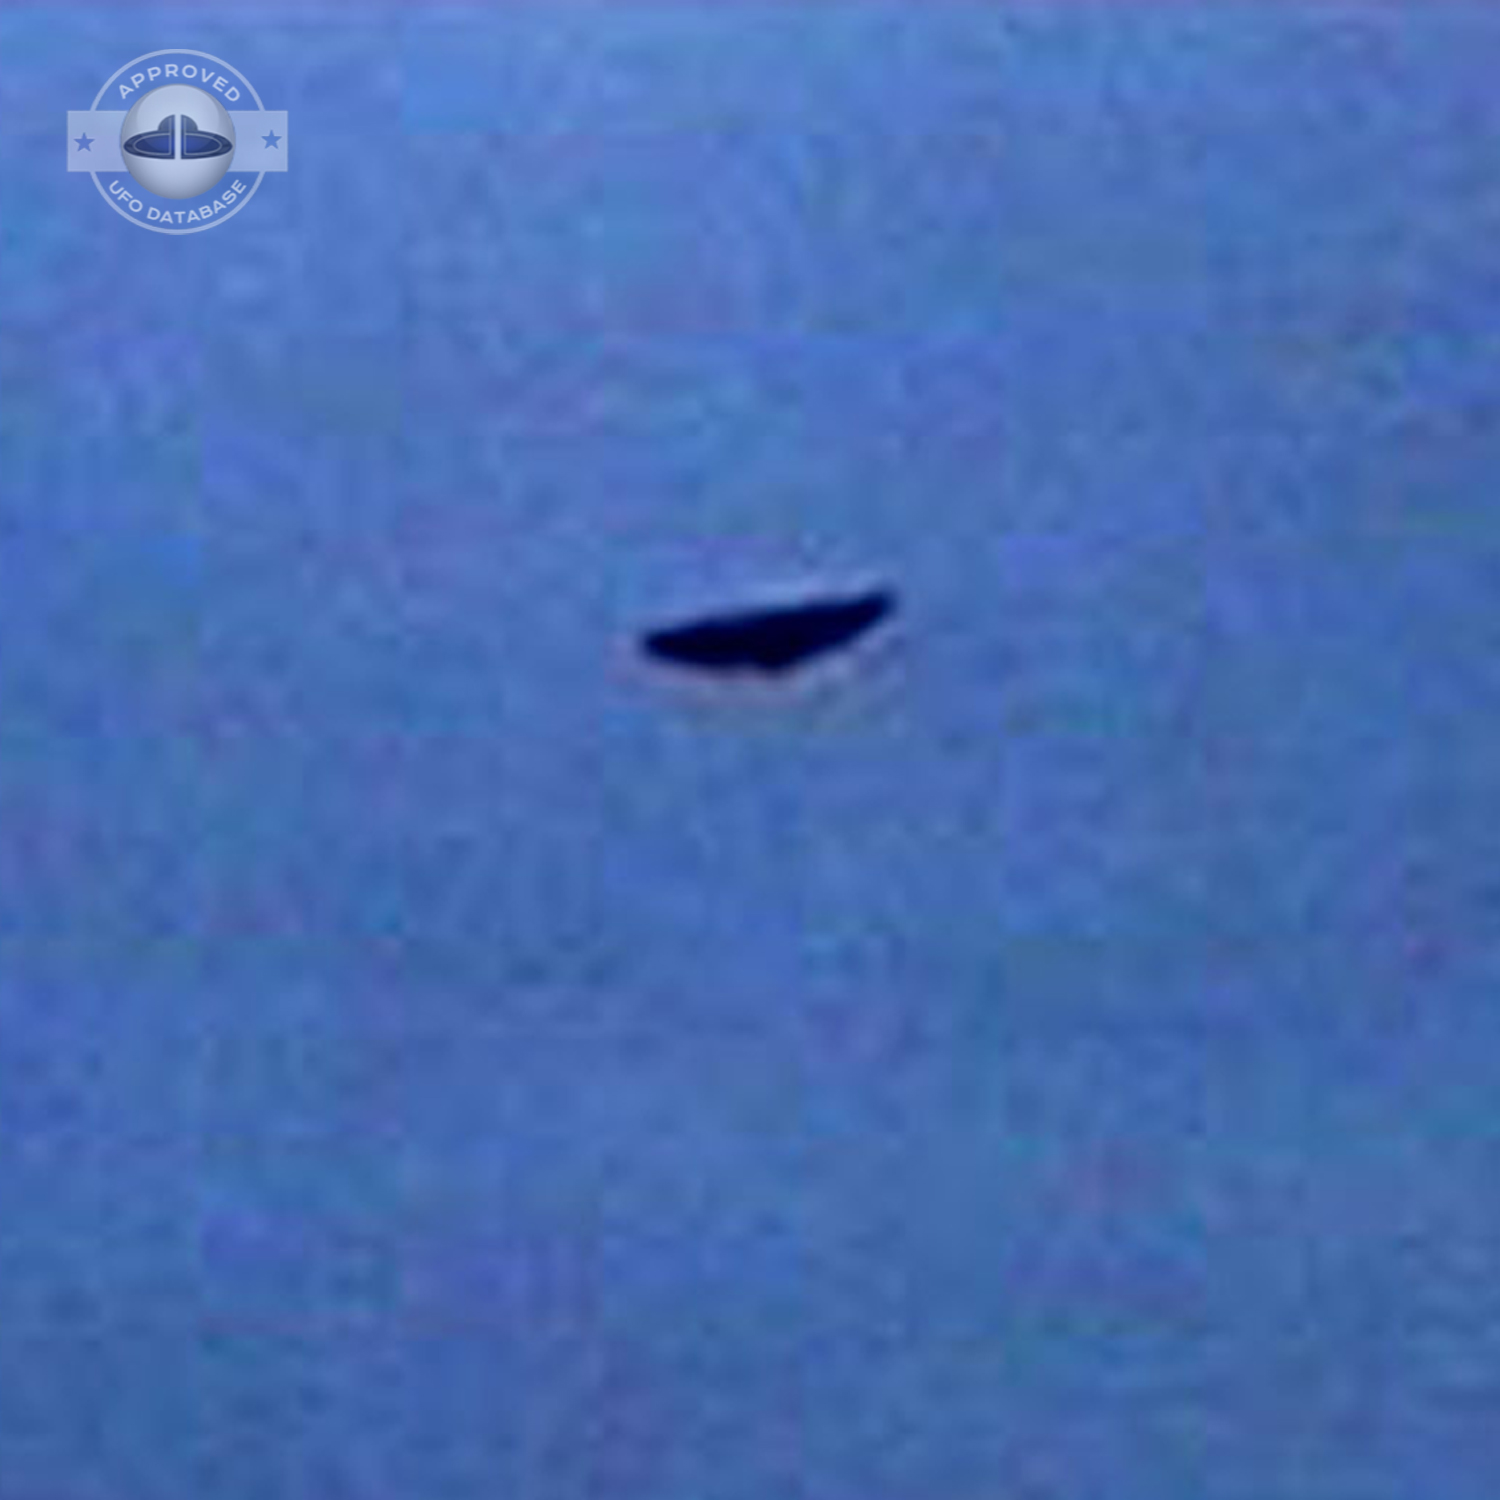 UFO seen over the famous Avebury stone circle region in Wiltshite UFO Picture #29-3